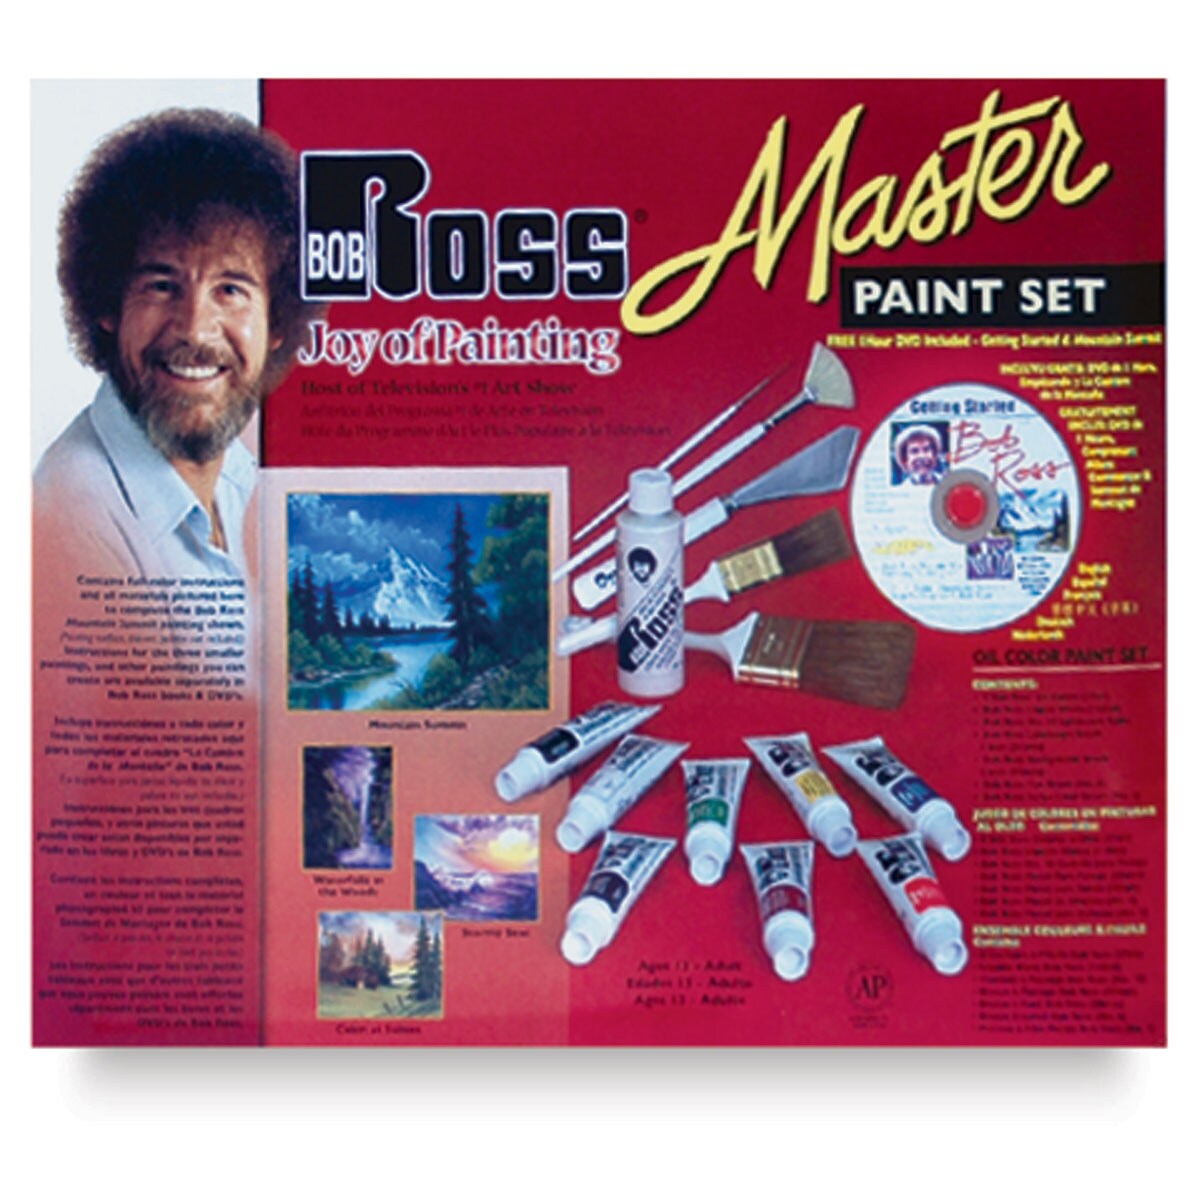 Bob Ross Master Paint Set - master paint set